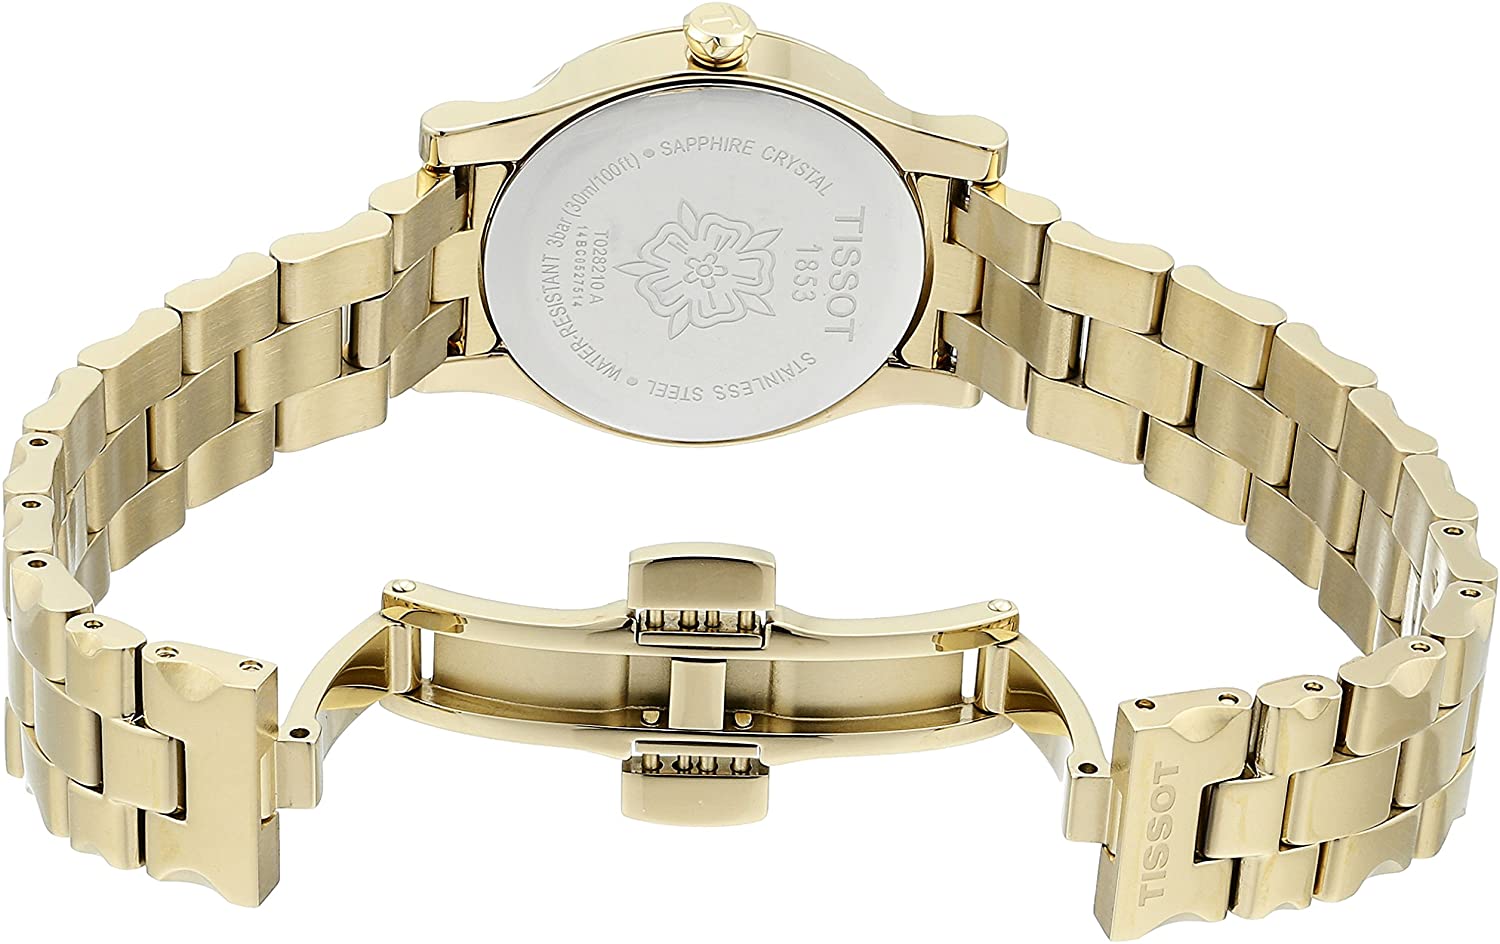 Tissot Swiss Made T-Wave Stylist-T Ladies' MOP Gold Plated Watch T0282103311700 - Prestige